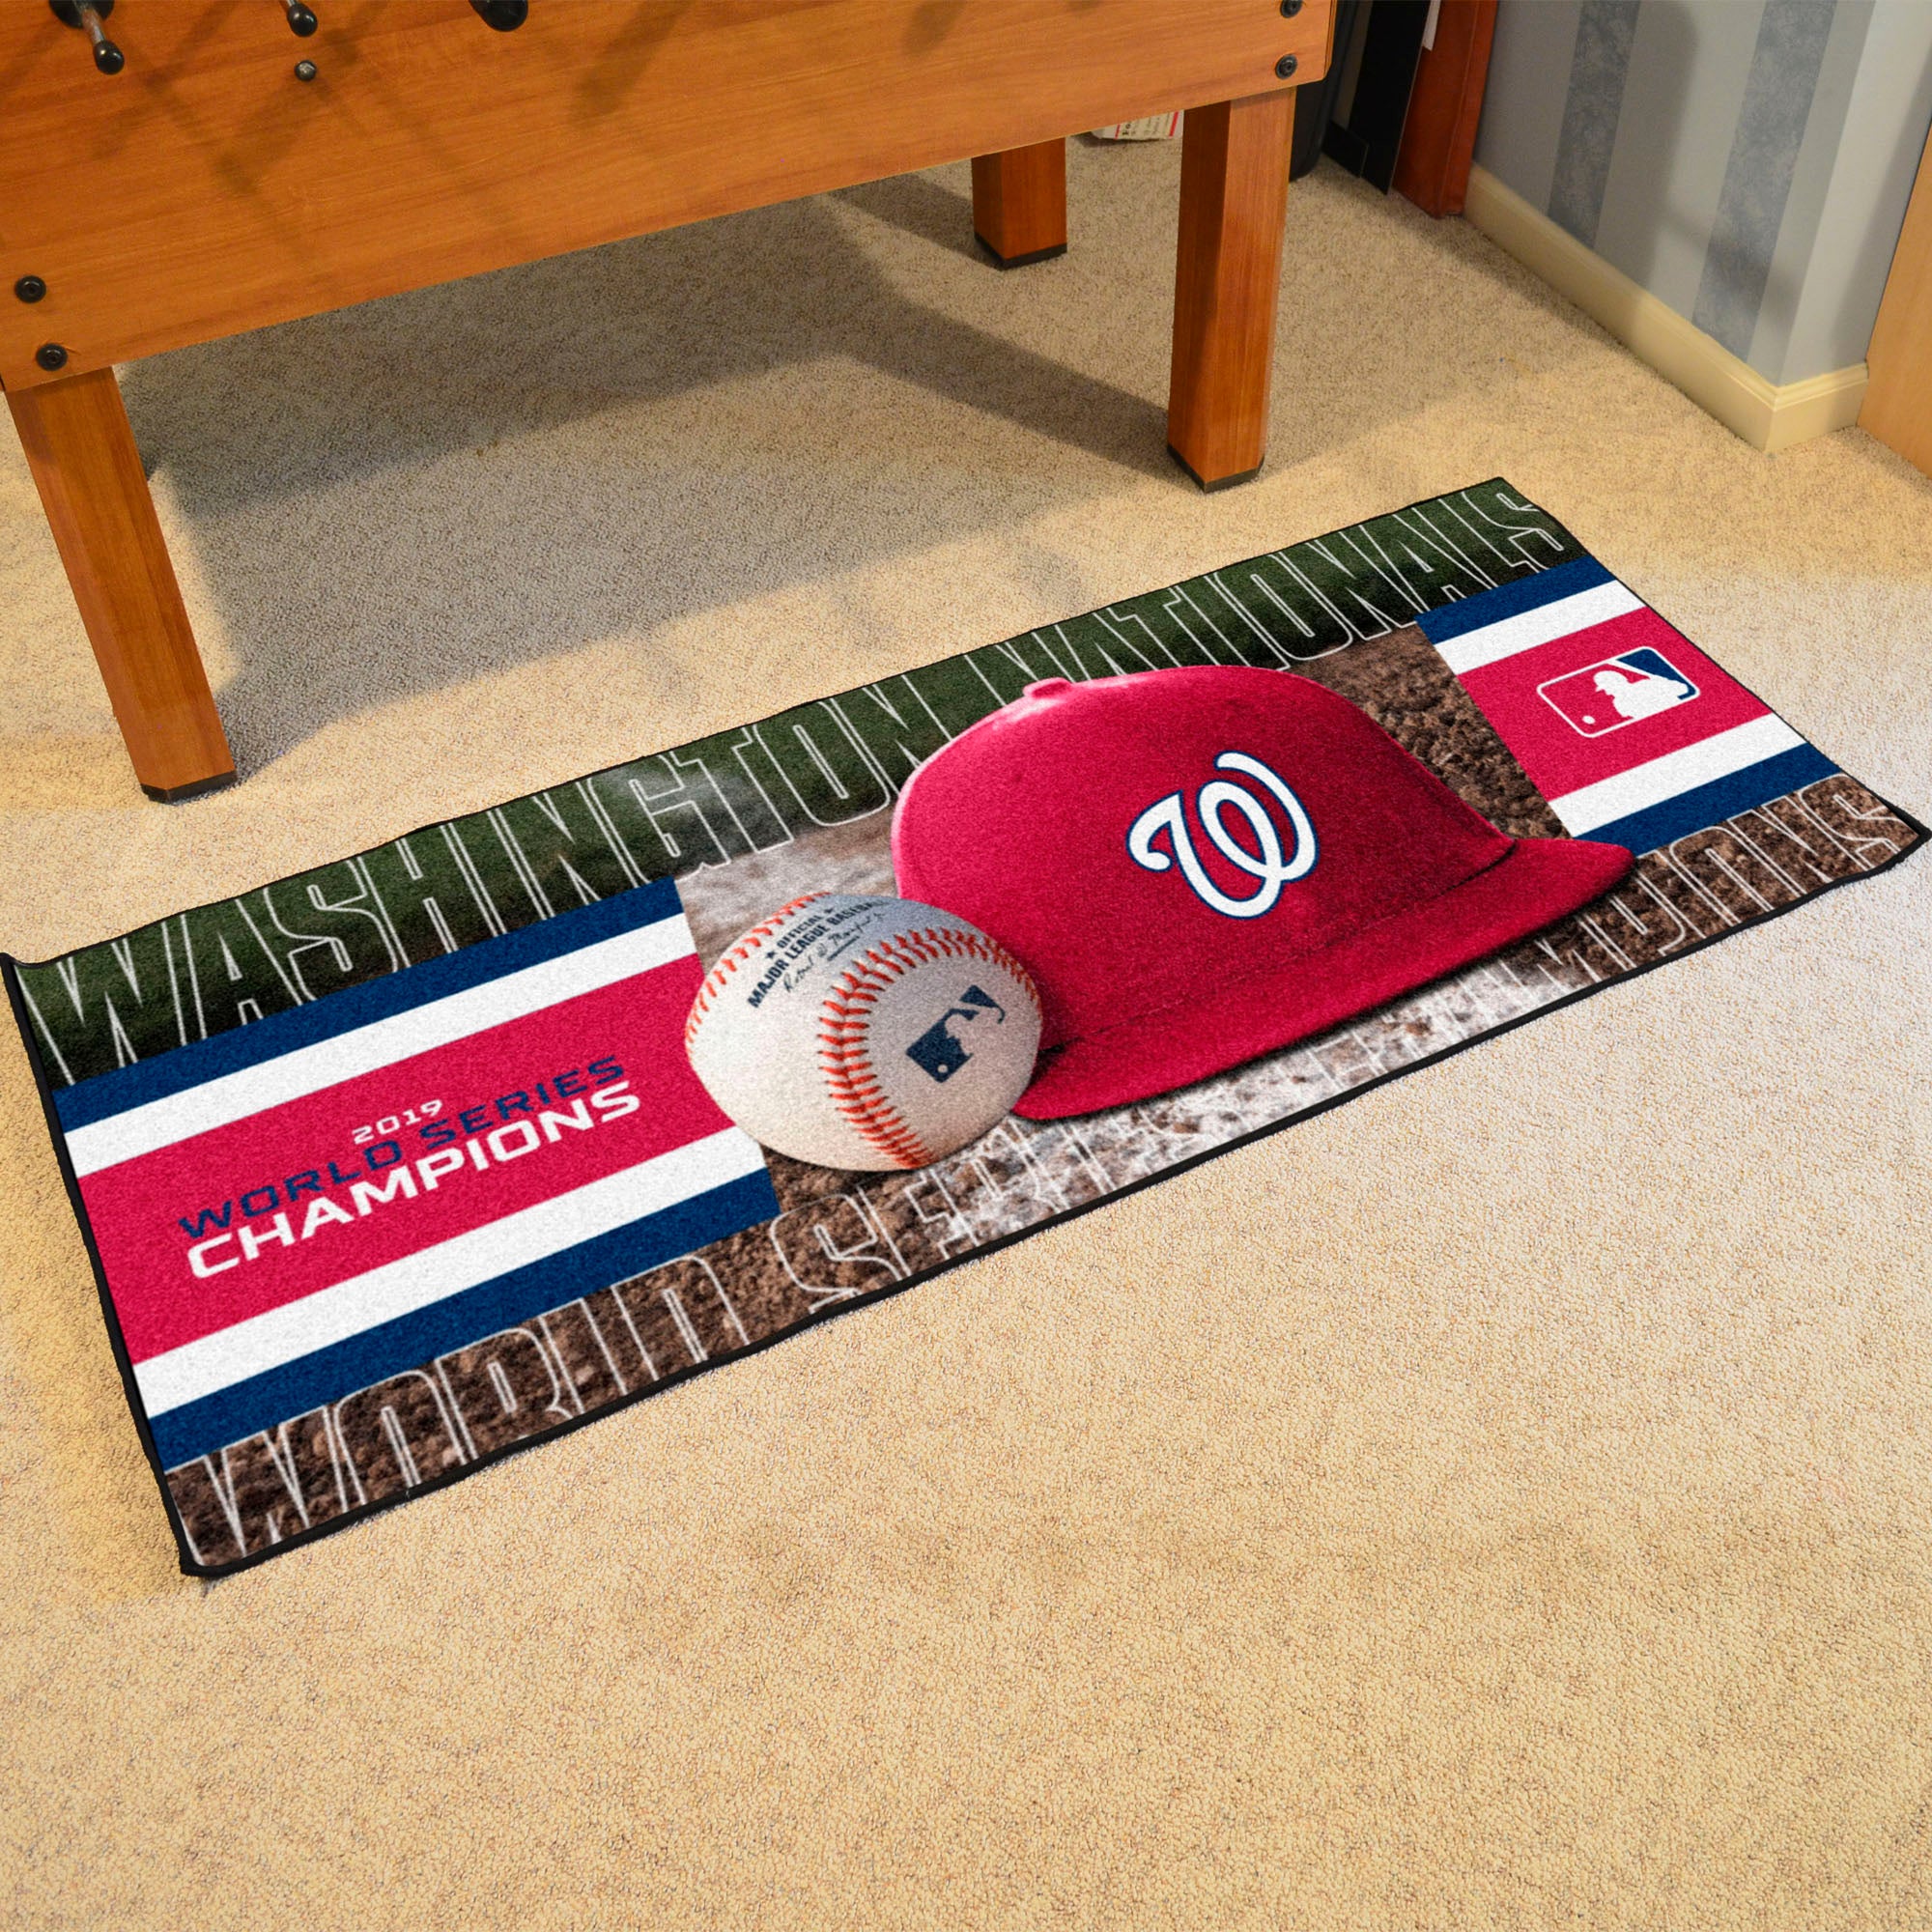 FANMATS, MLB - Washington Nationals World Series Champions Baseball Runner Rug - 30in. x 72in.